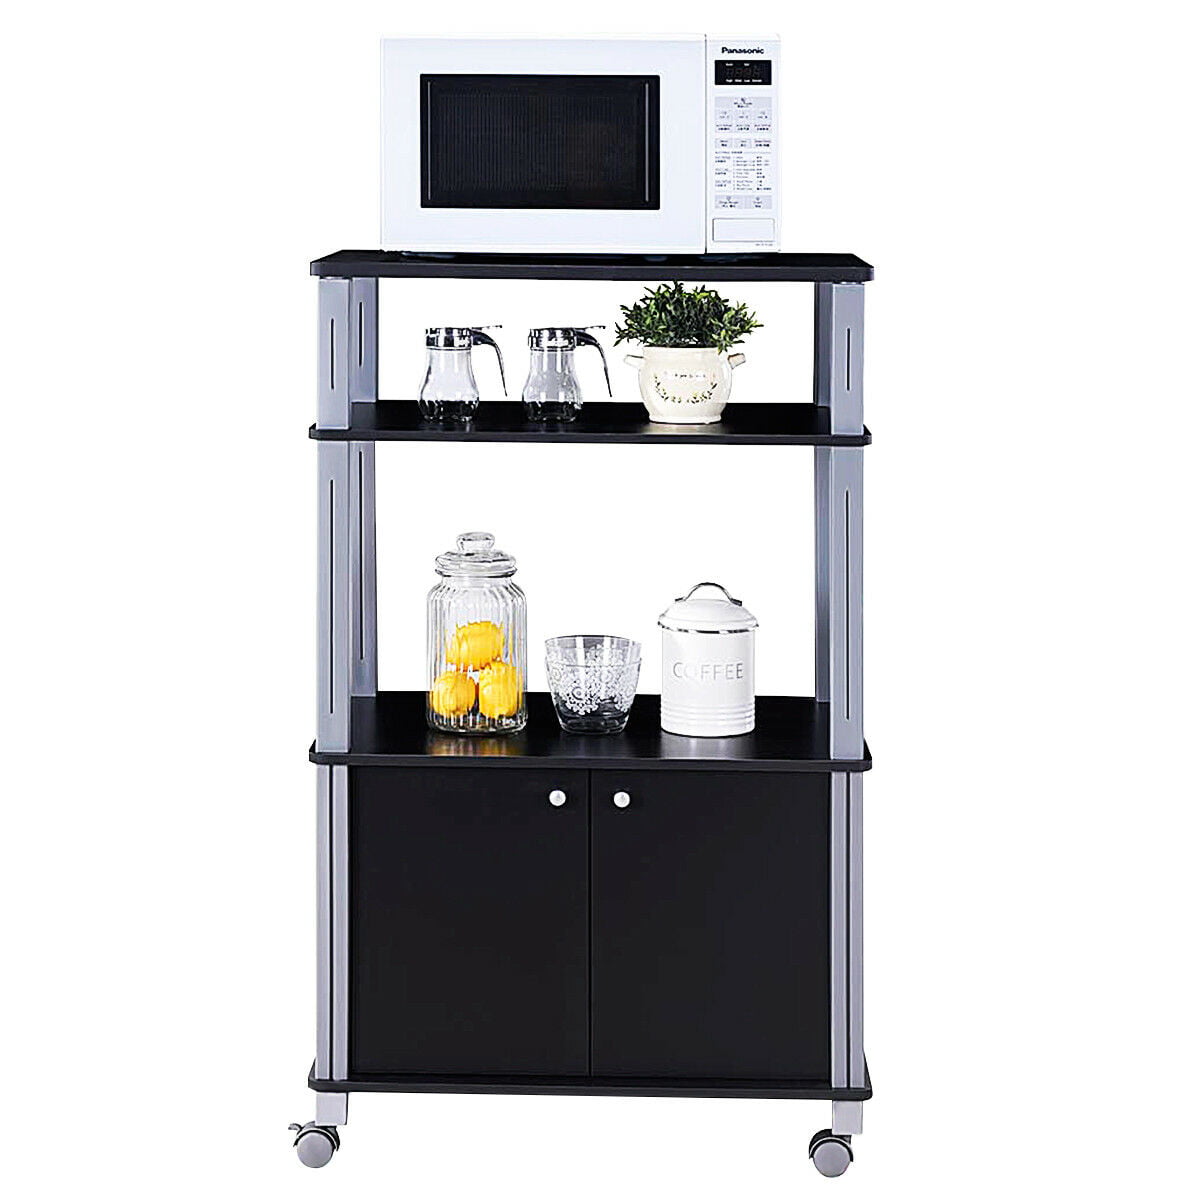 Gymax Bakers Rack Microwave Stand Rolling Storage Cart Multi-functional Display Black